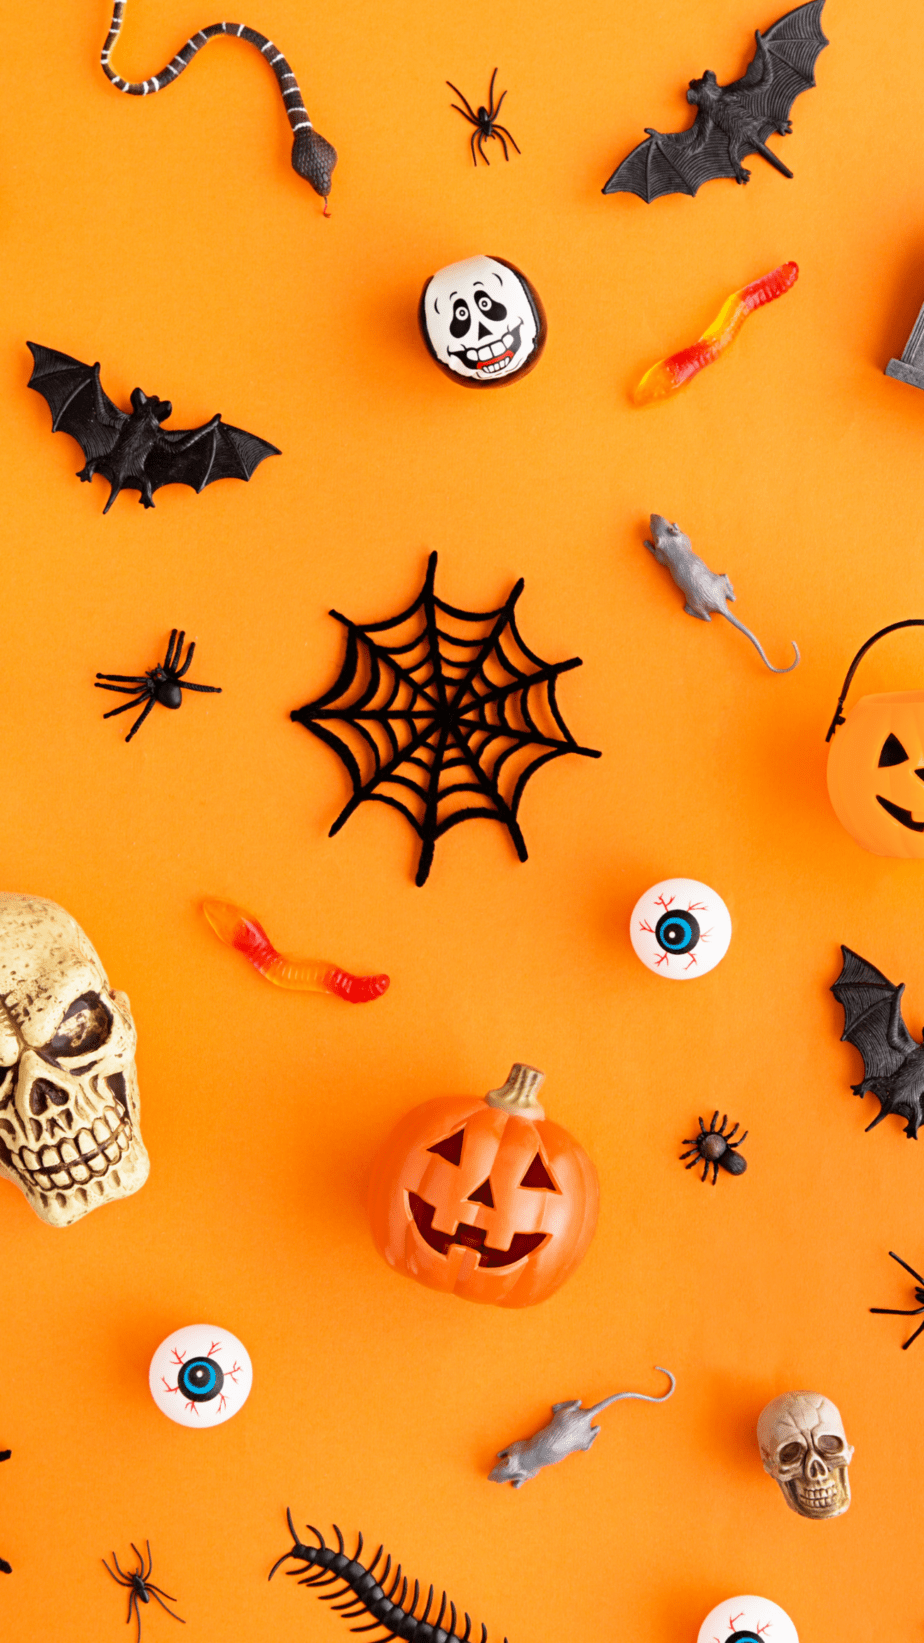 30 Halloween Wallpapers For iPhone